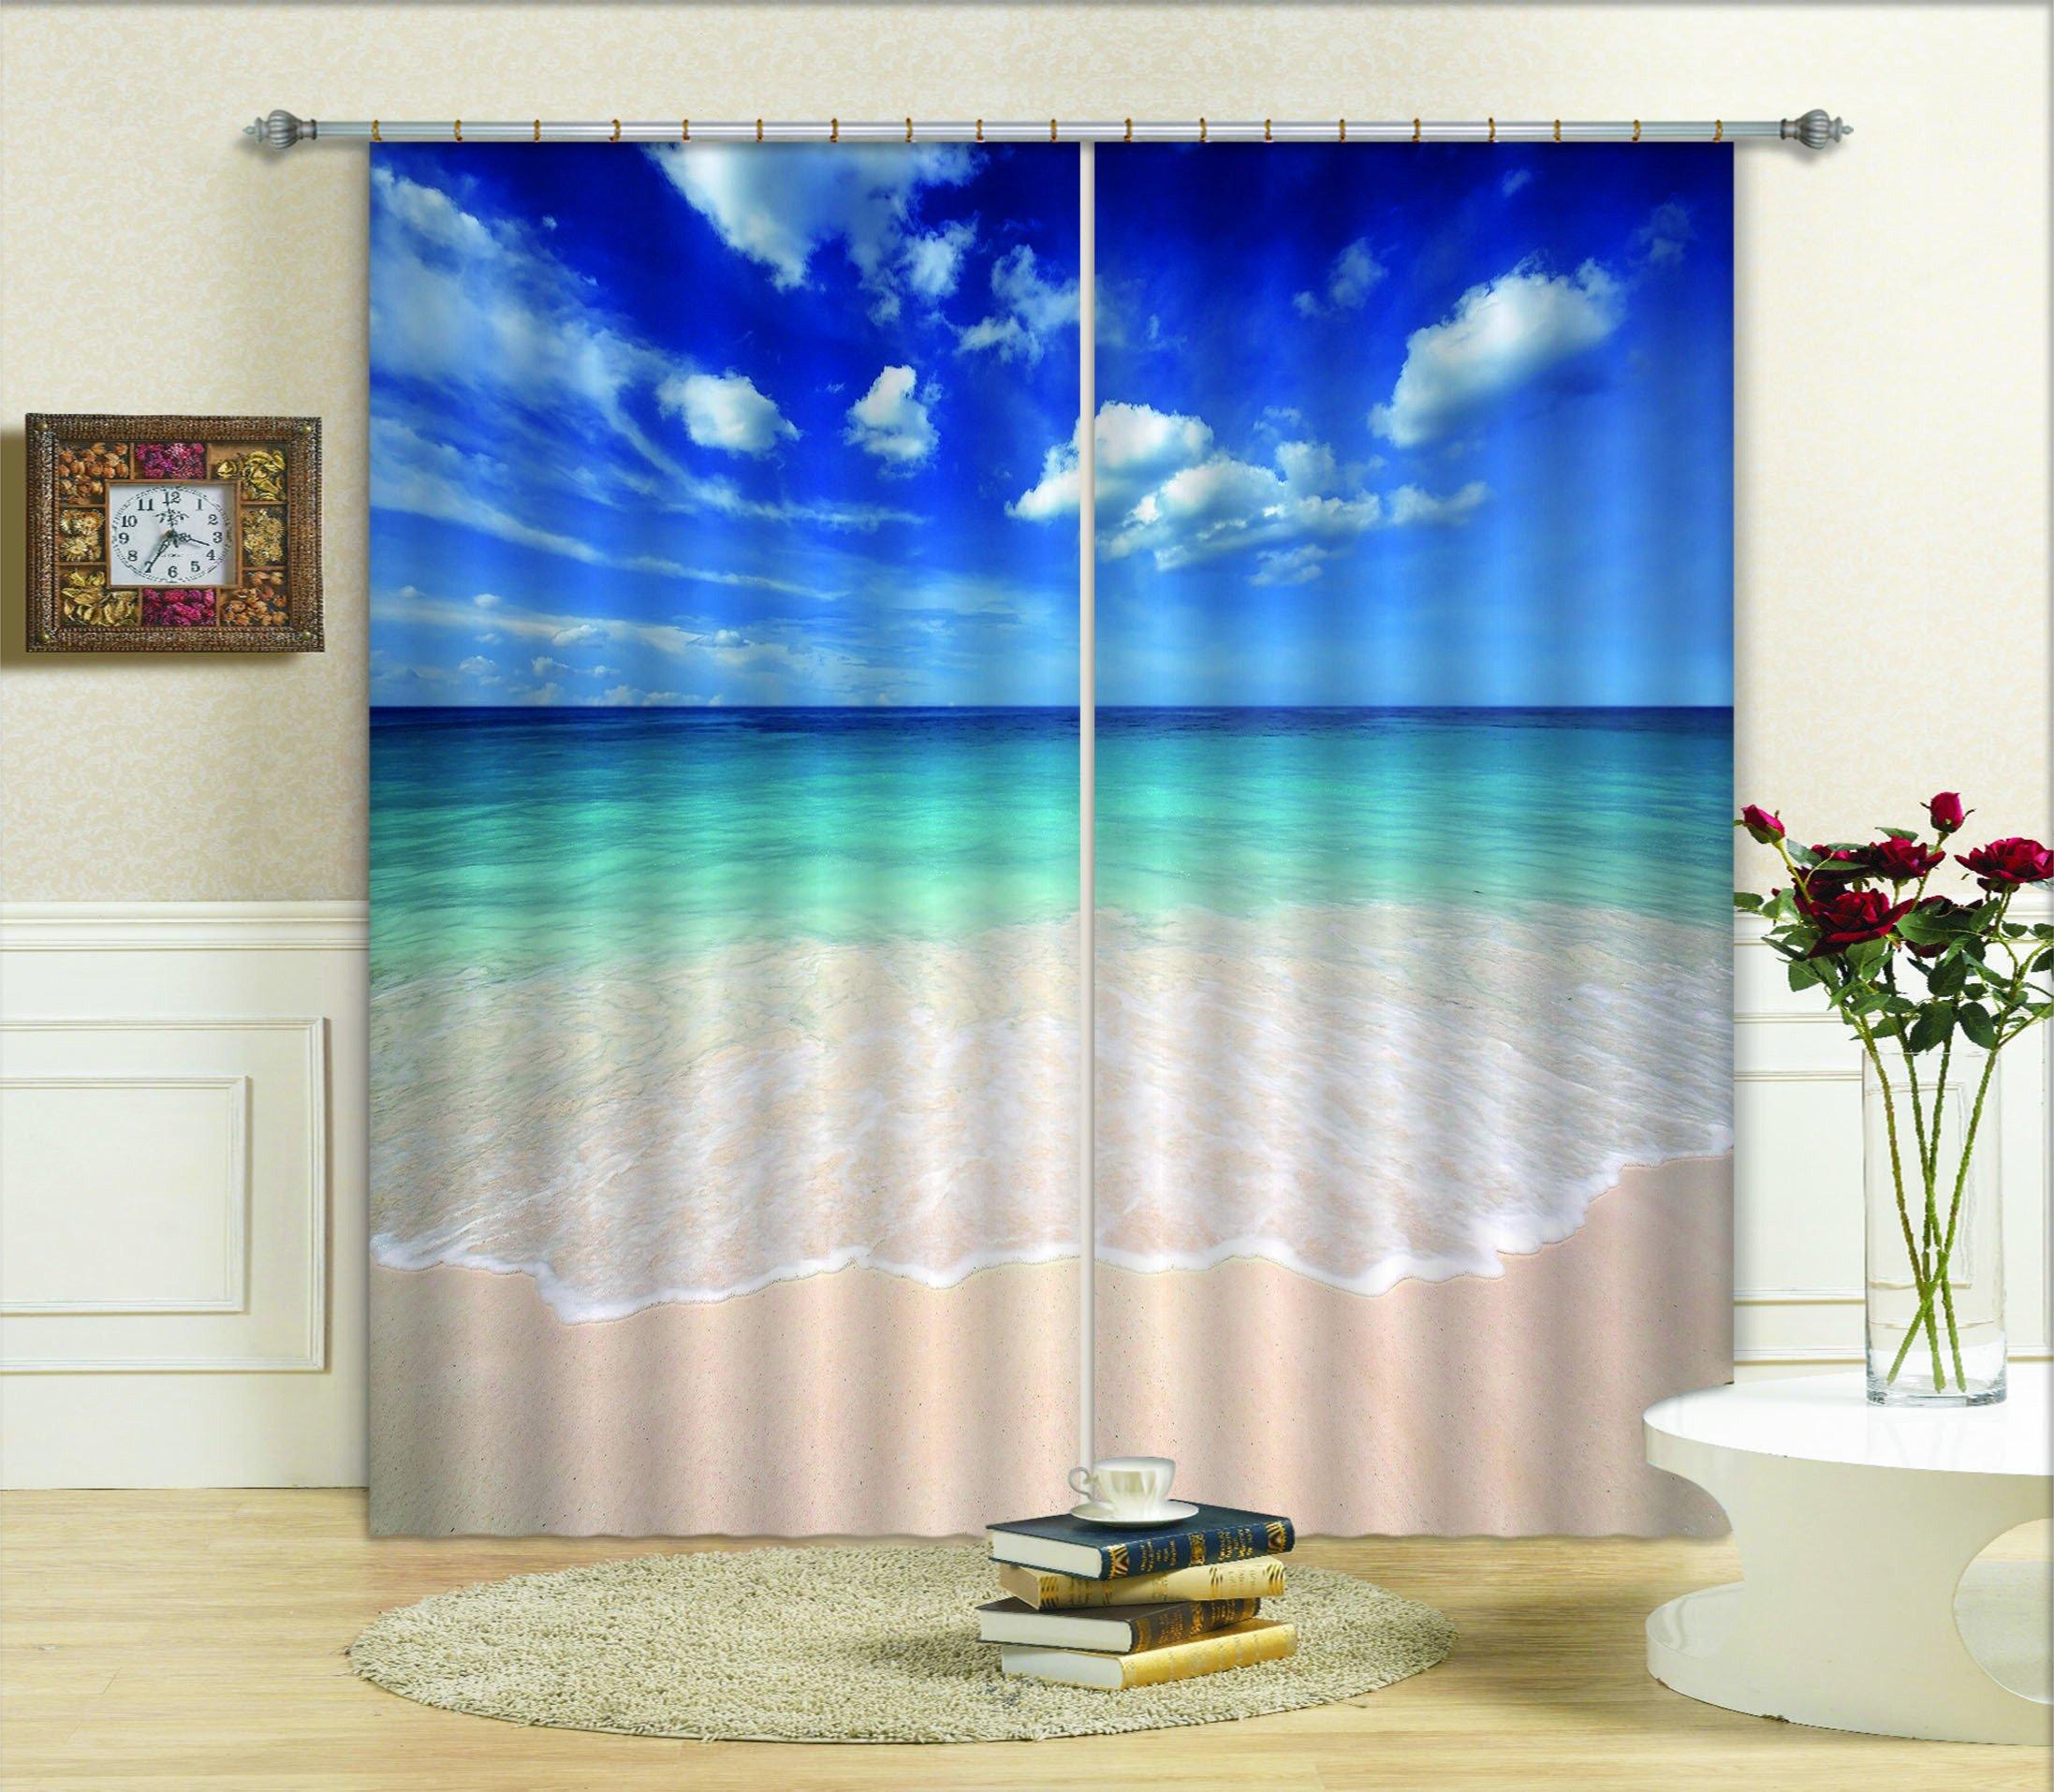 3D Blue Sky and White Clouds Beach Curtains Drapes Wallpaper AJ Wallpaper 